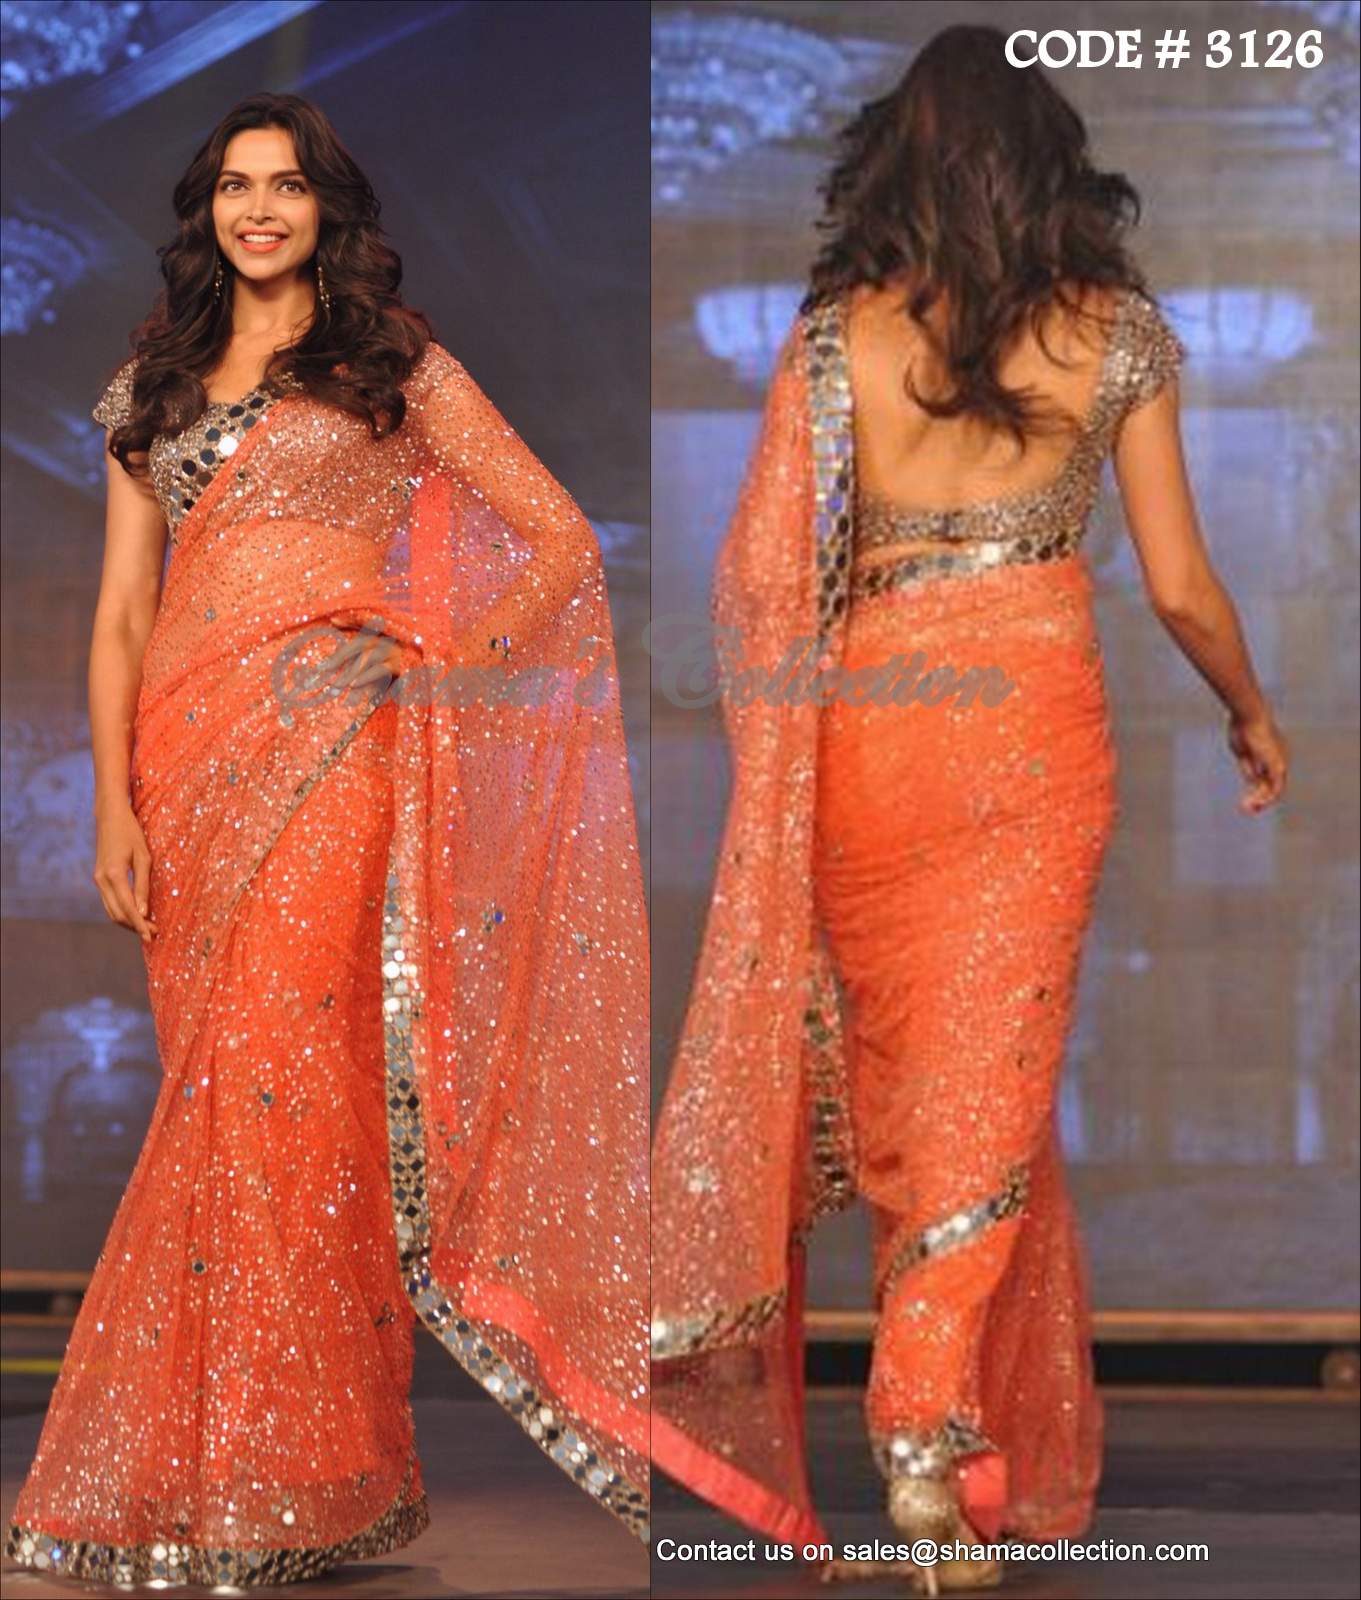 Deepika Padukone In Bright Orange Dress For Chhapaak Promotions -  Boldsky.com